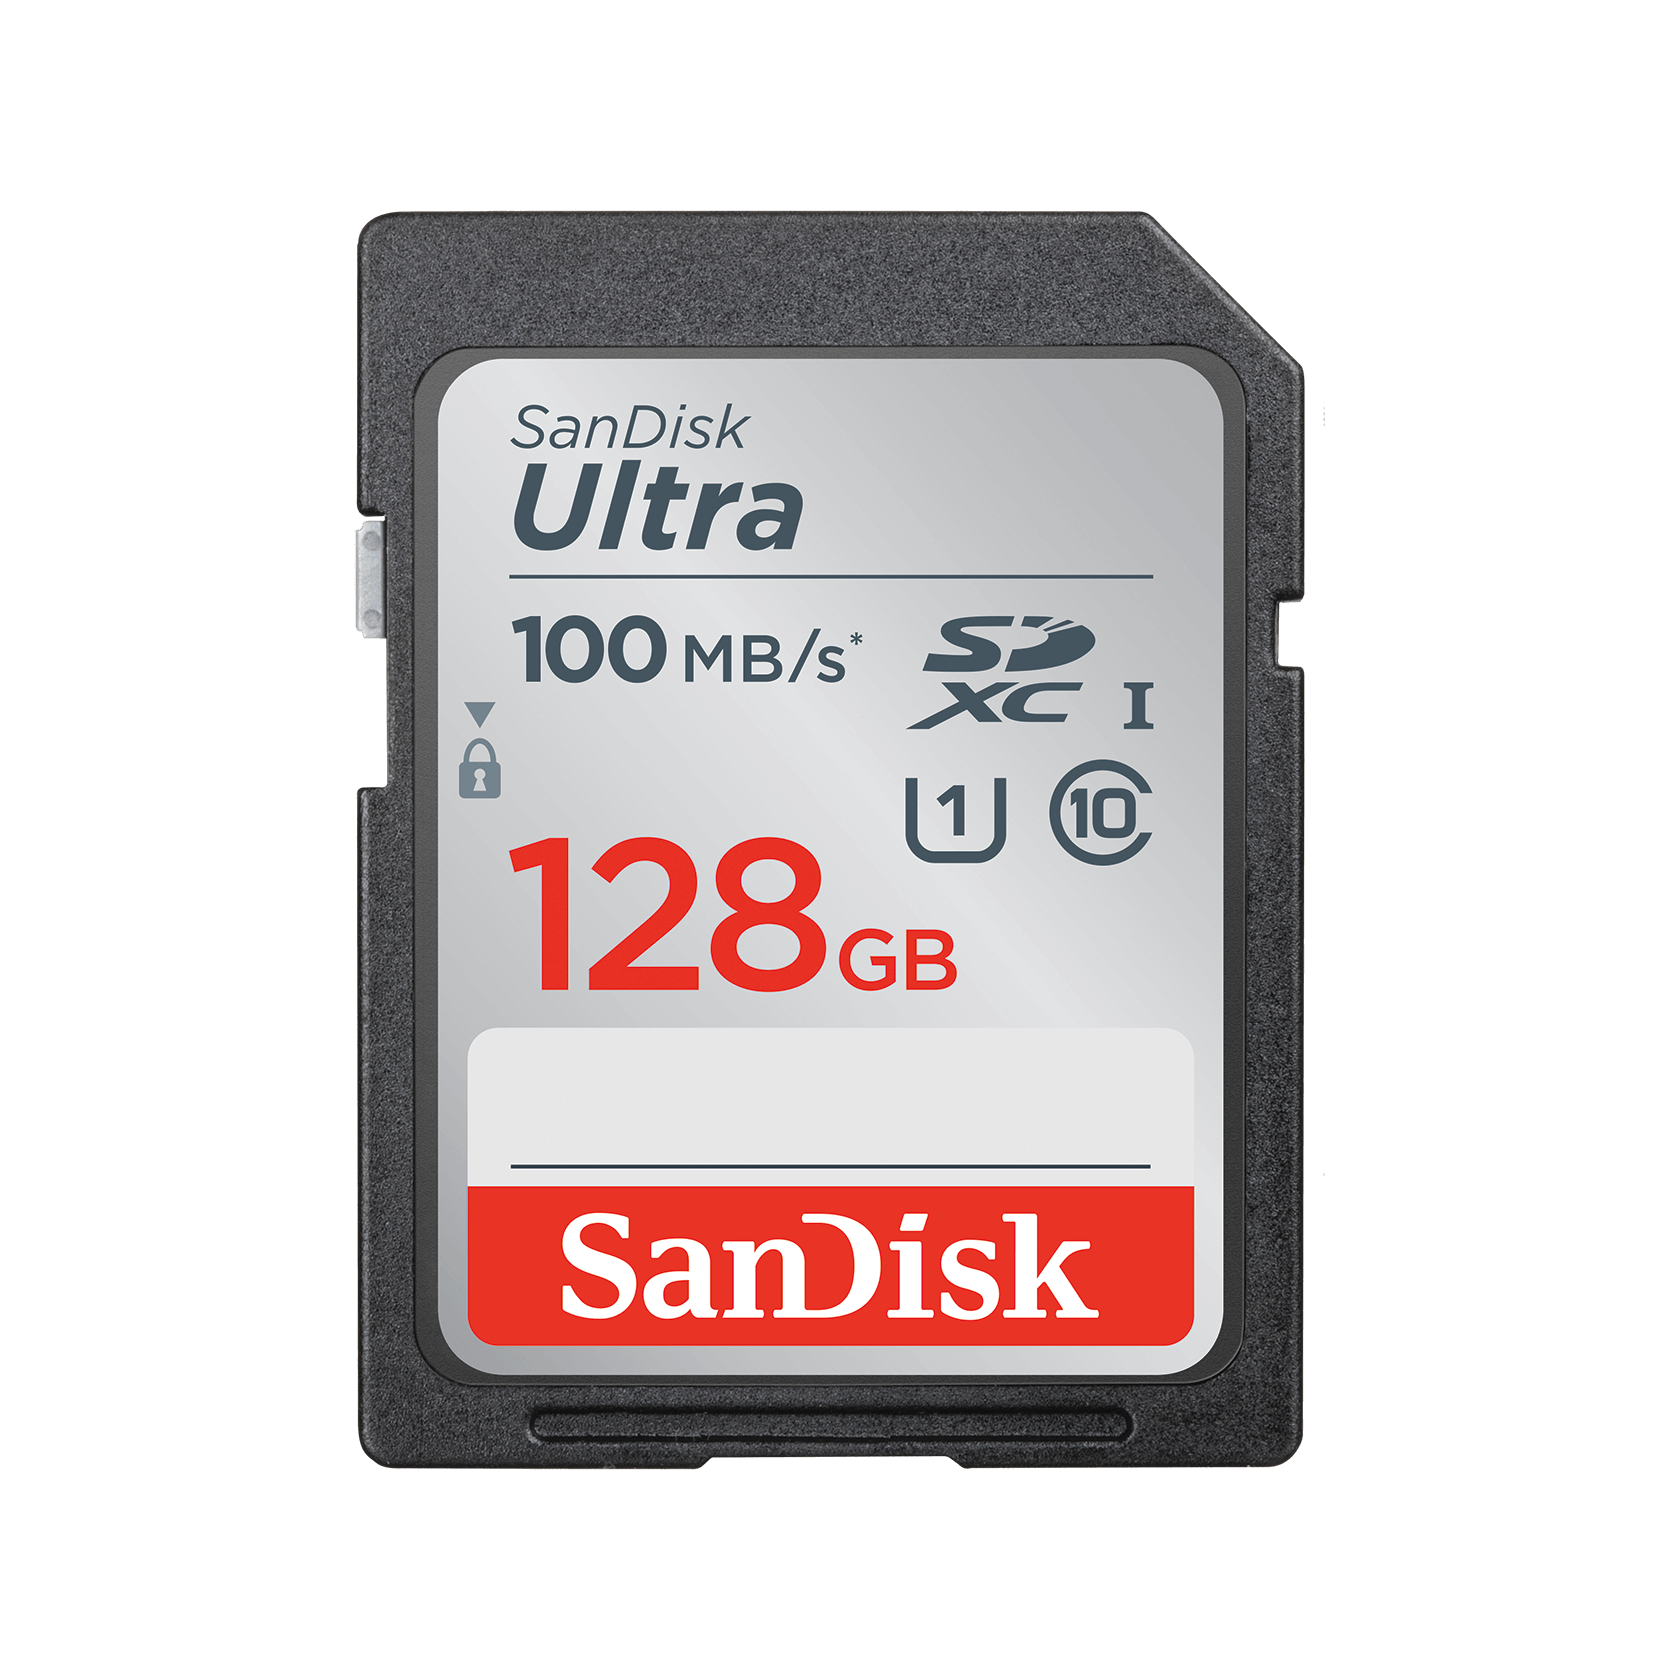 SanDisk Ultra SDHC/SDXC Memory Card 128GB - SDSDUNR-128G-GN6IN